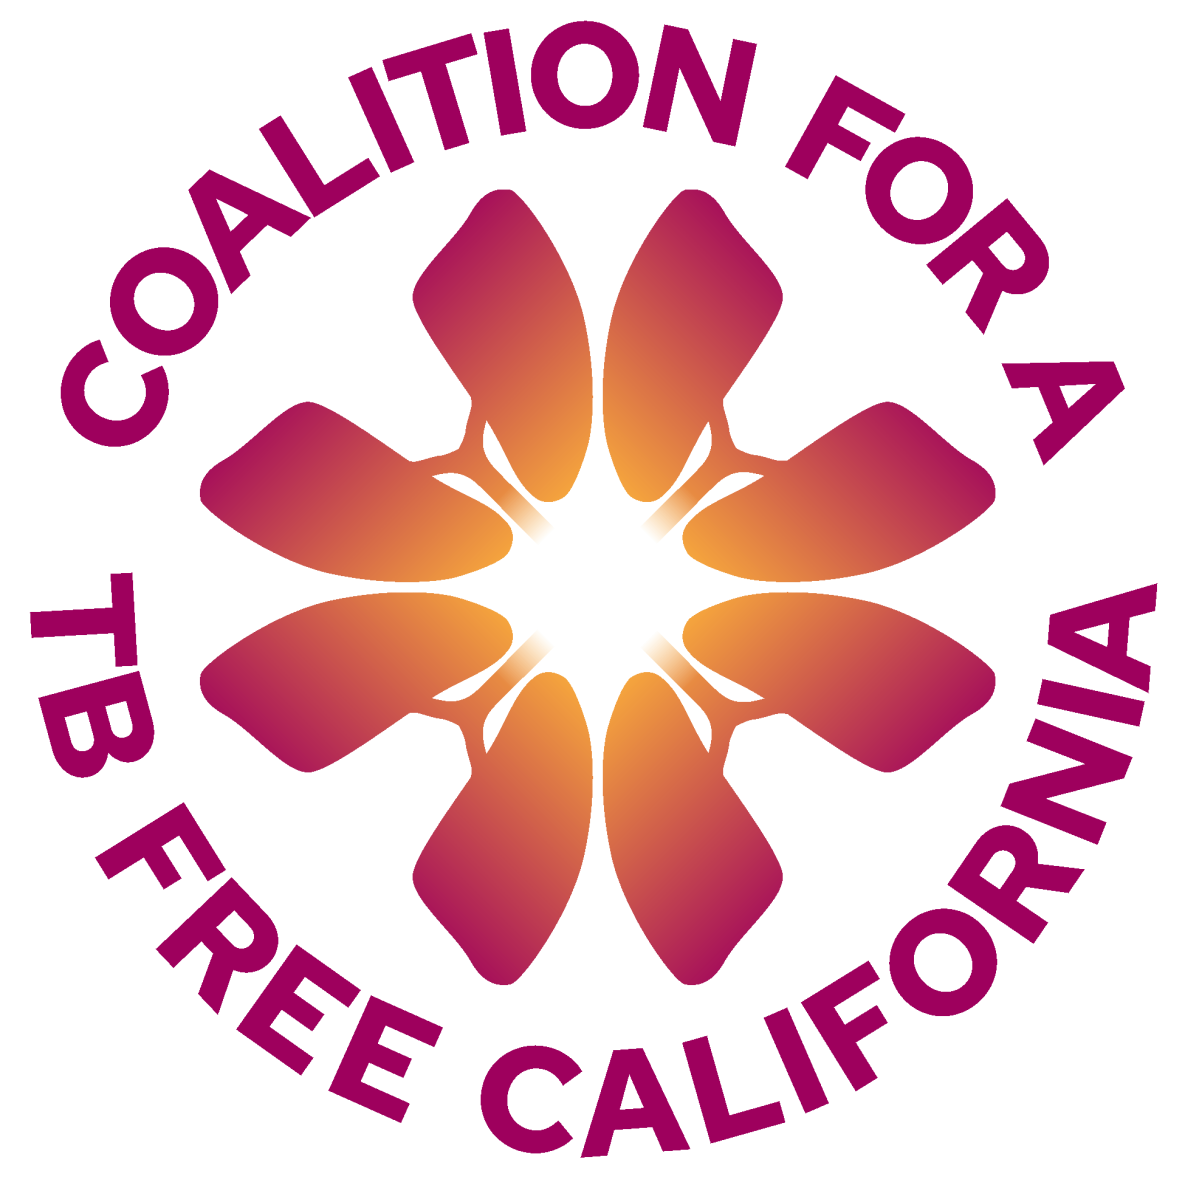 Coalition for a TB Free California